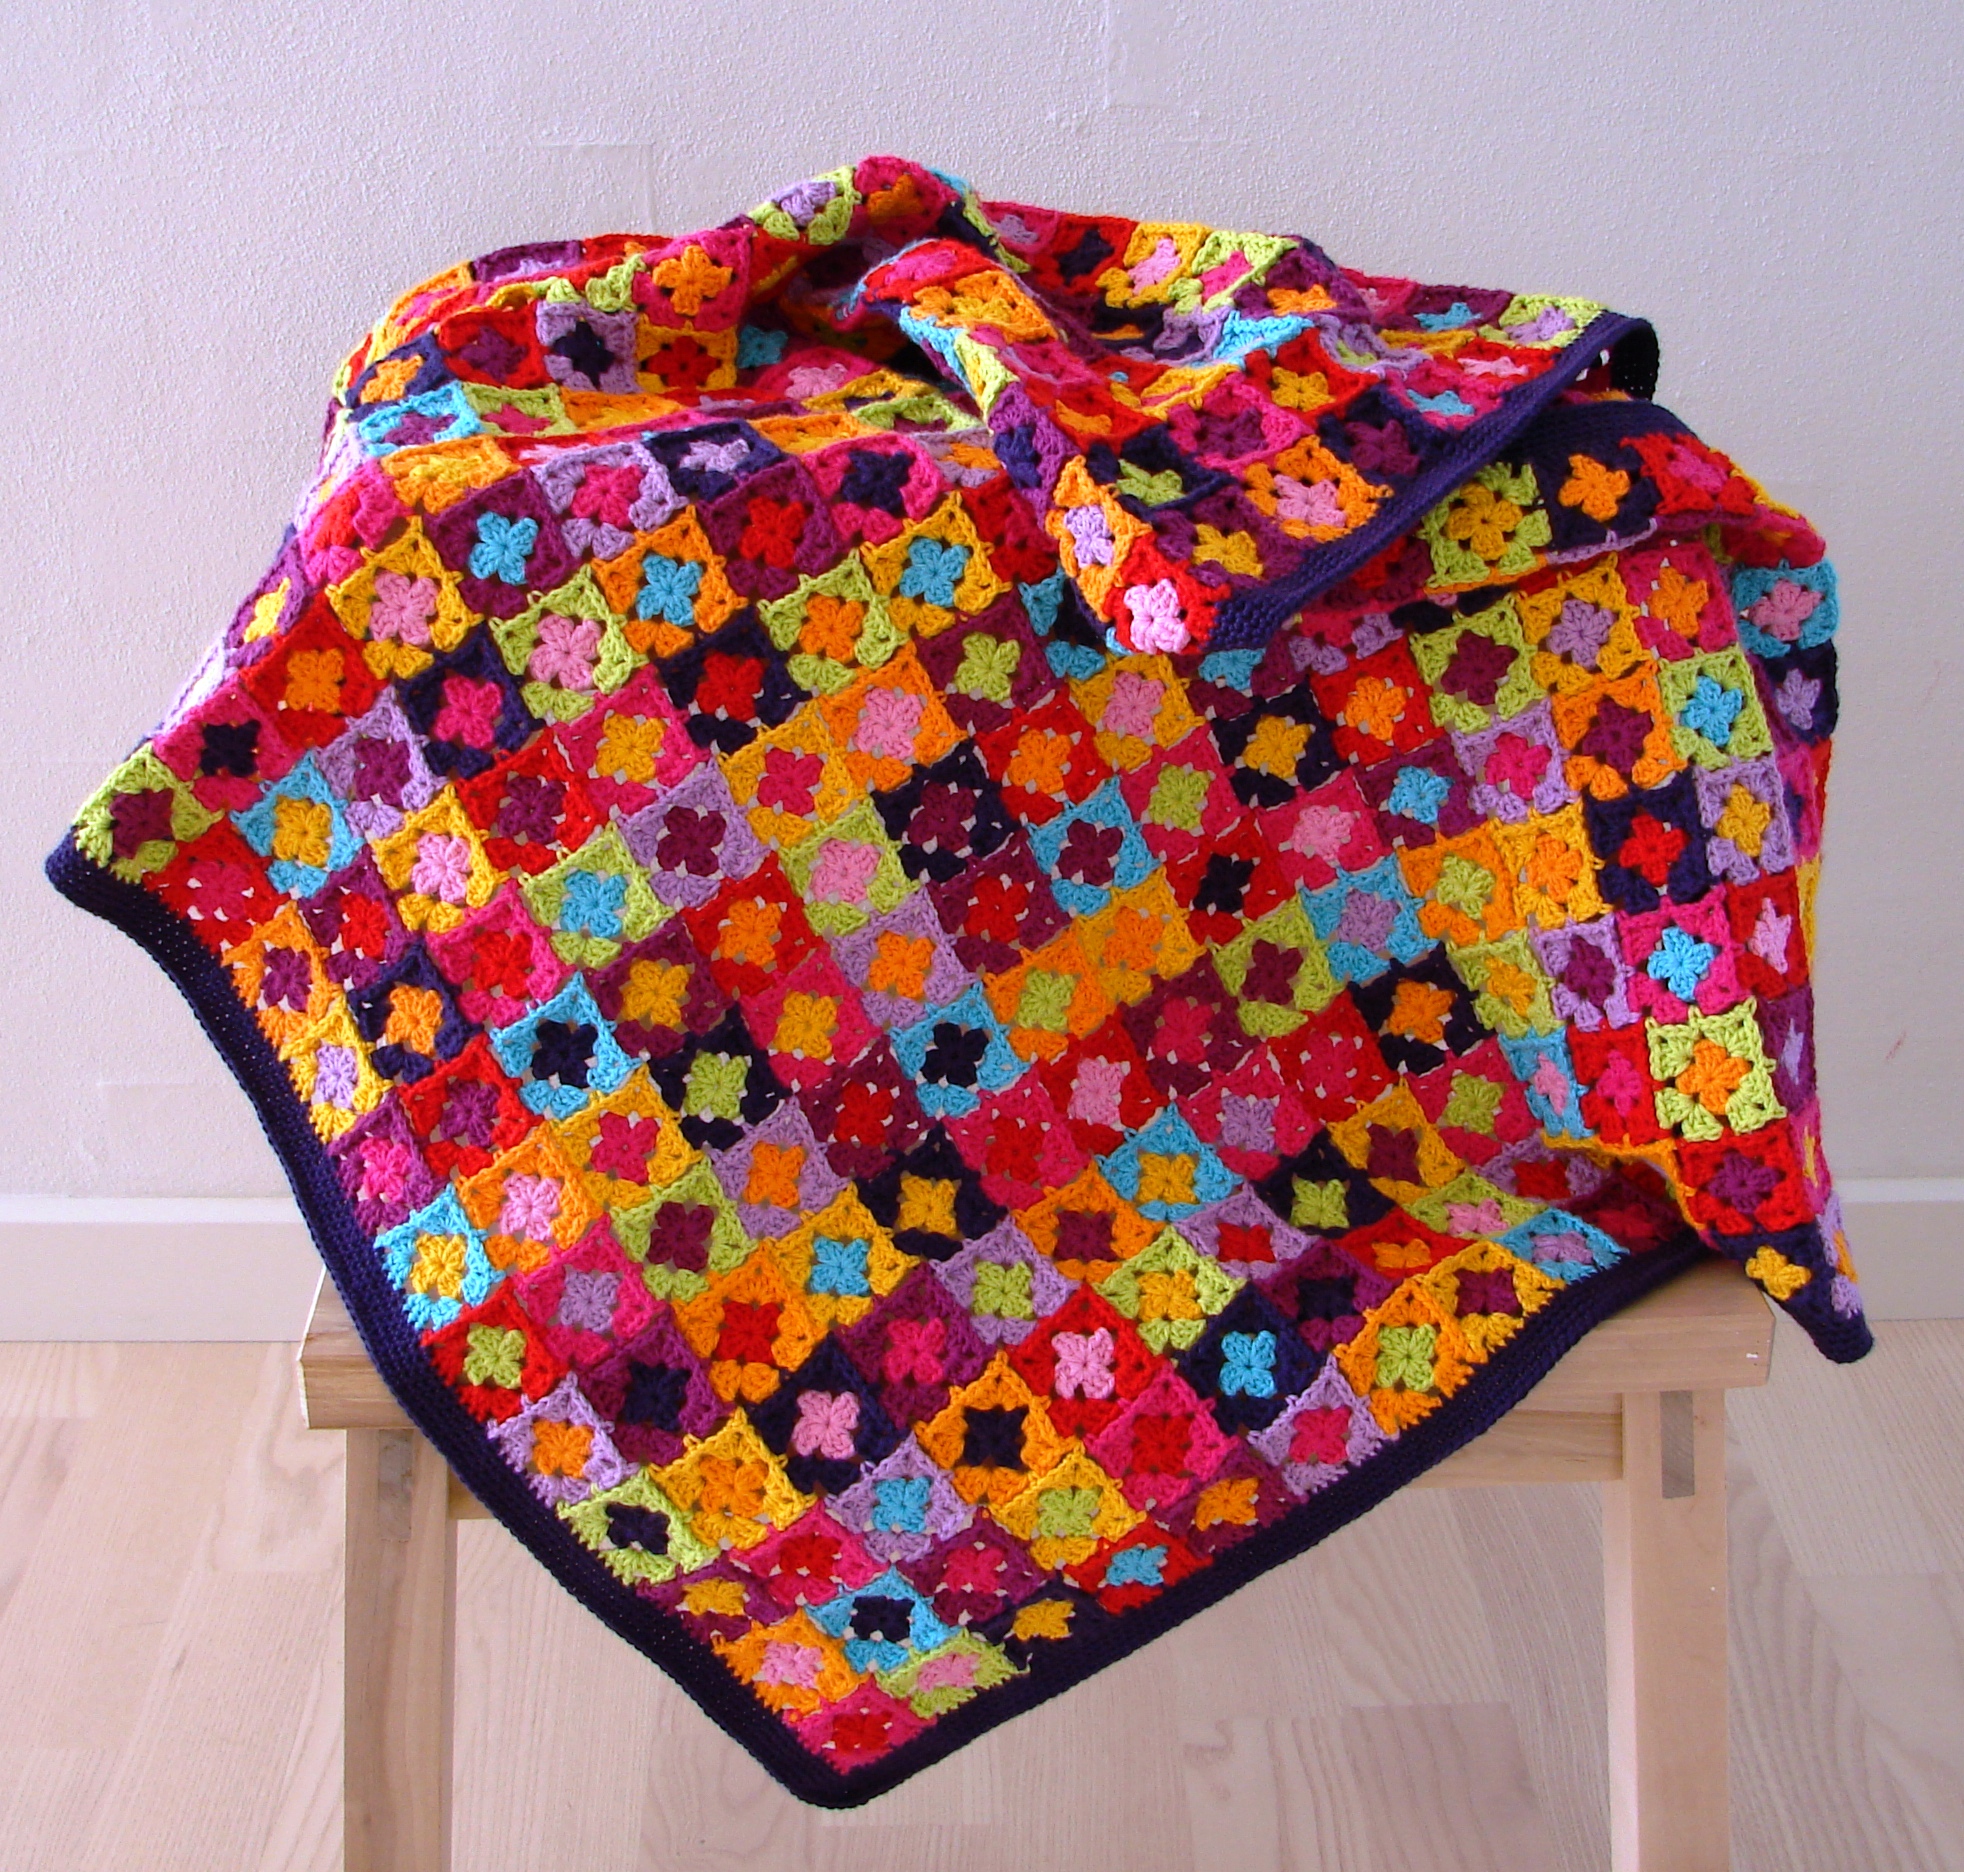 Free Afghan Crochet Patterns, Free Throw Crochet Patterns, Free